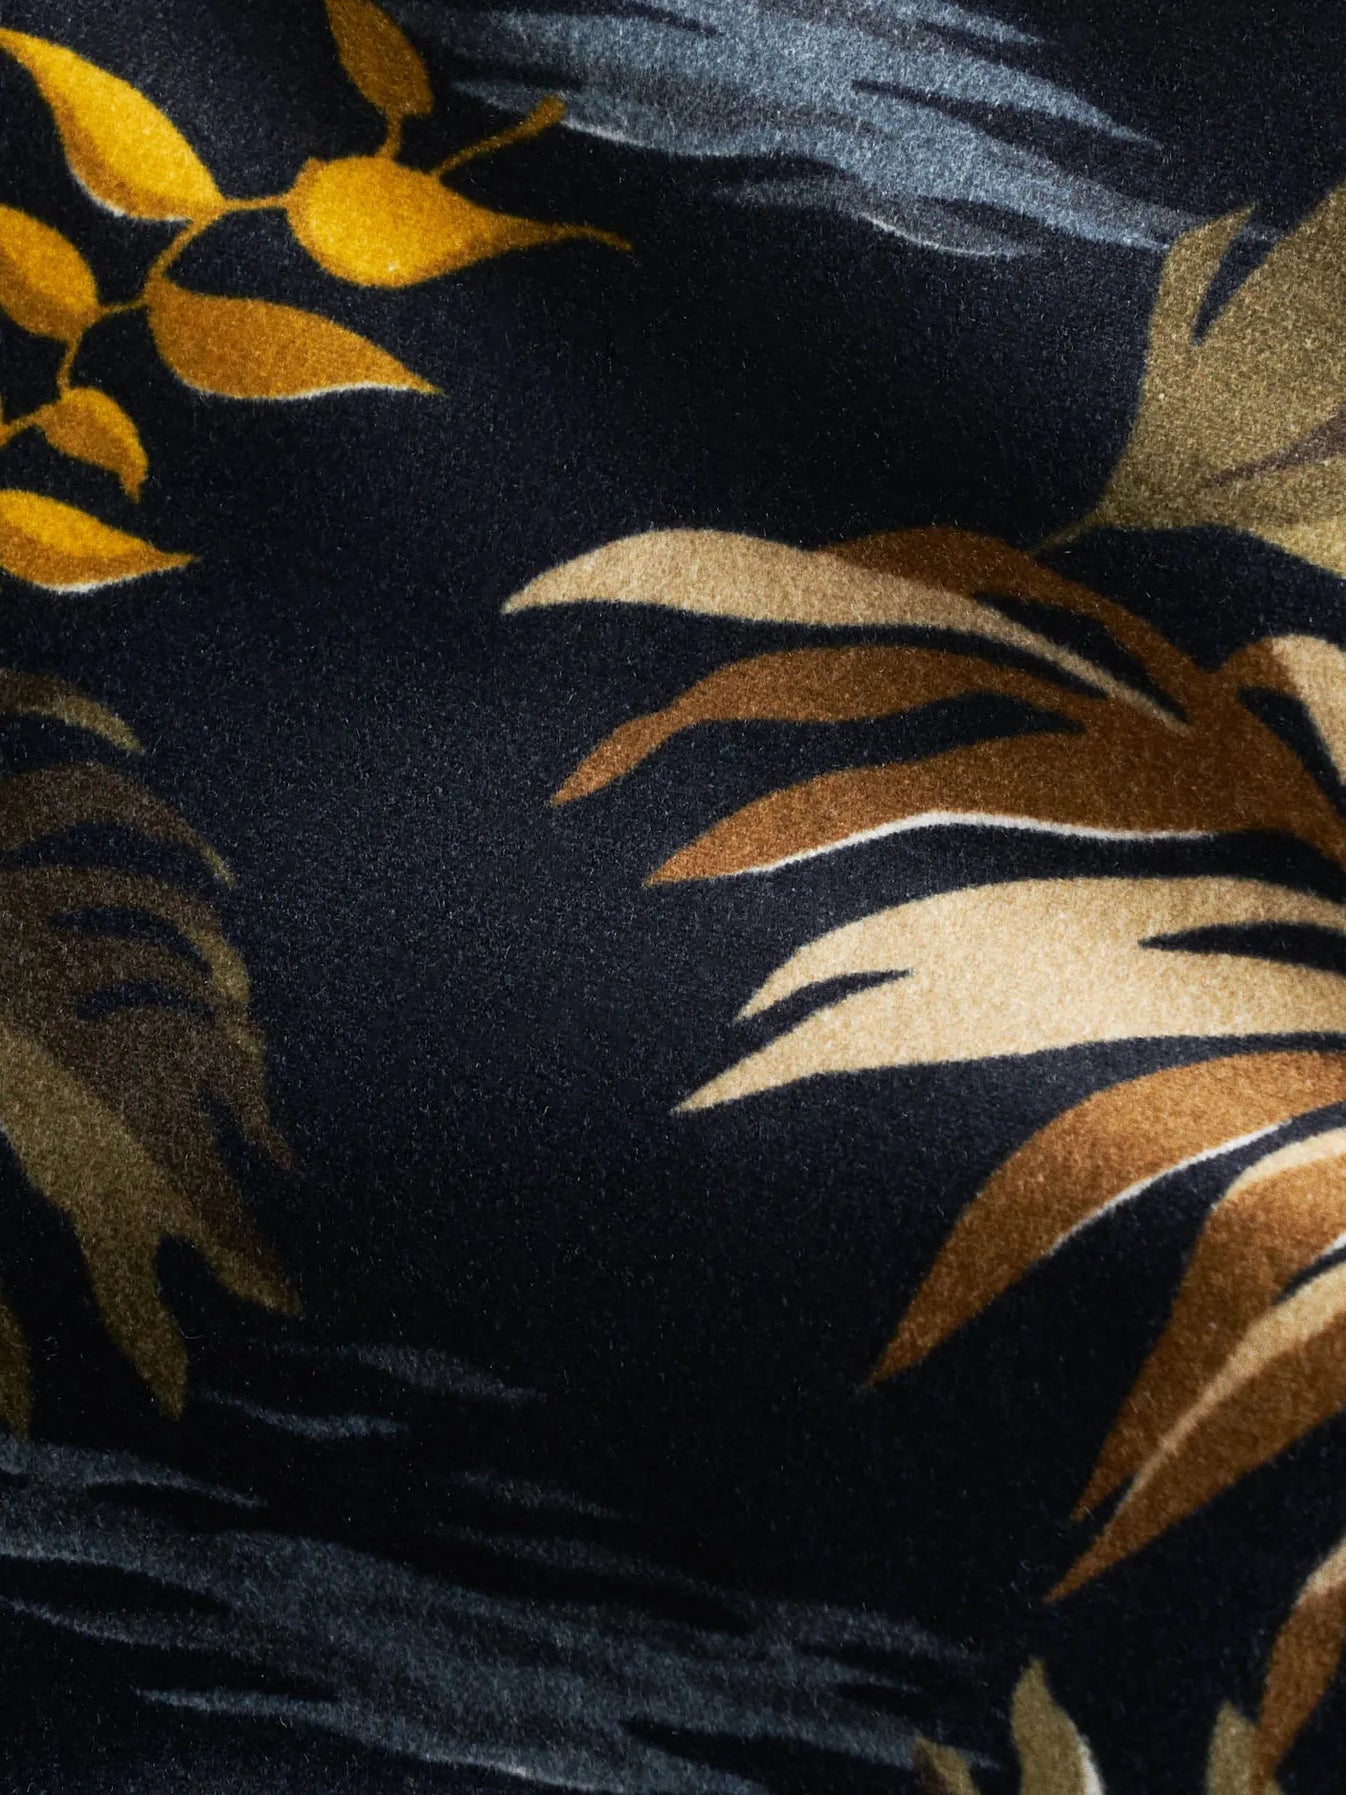 Tropical Print Velvet Jacket